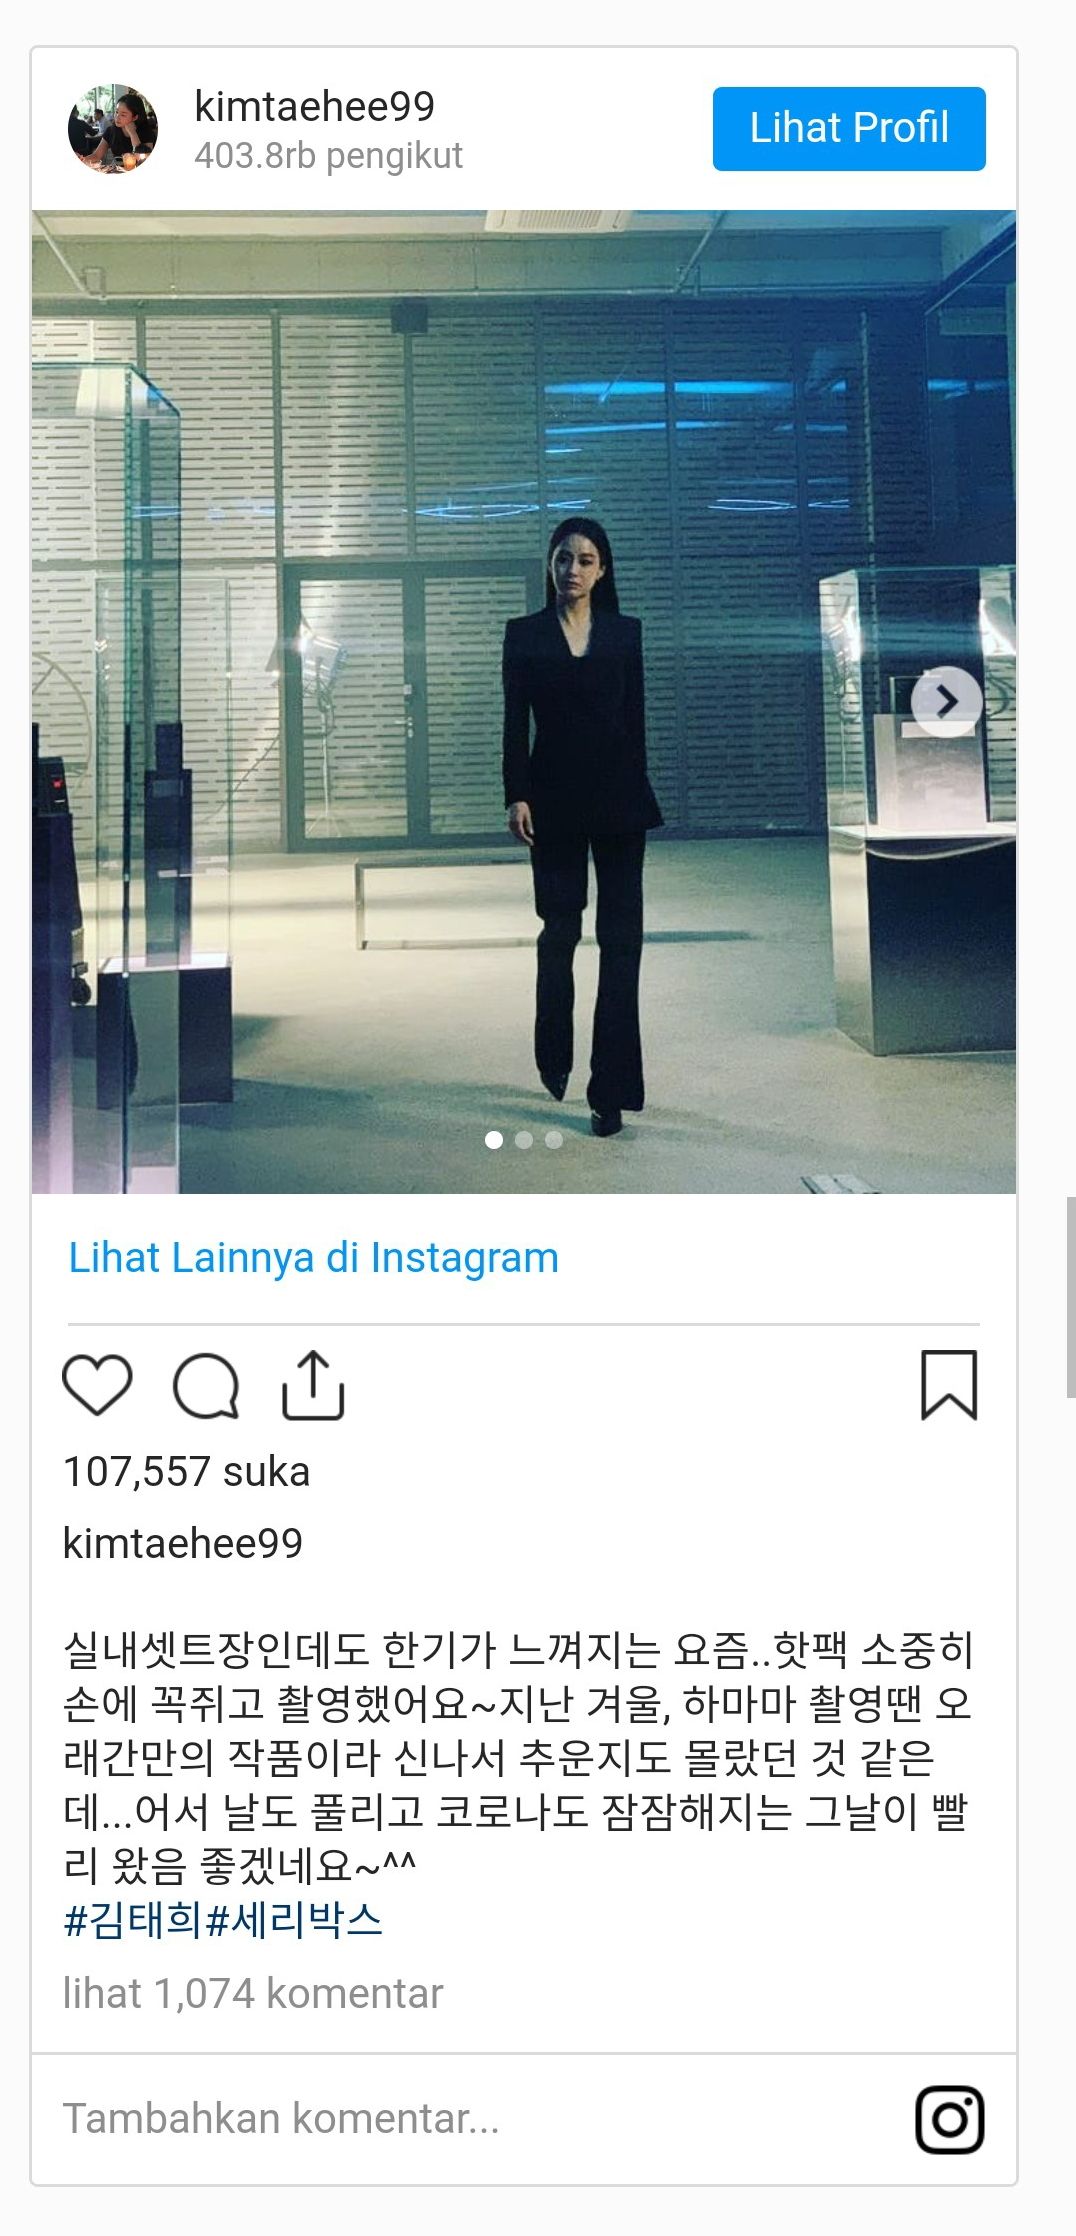 Instagram aktris Kim Tae Hee